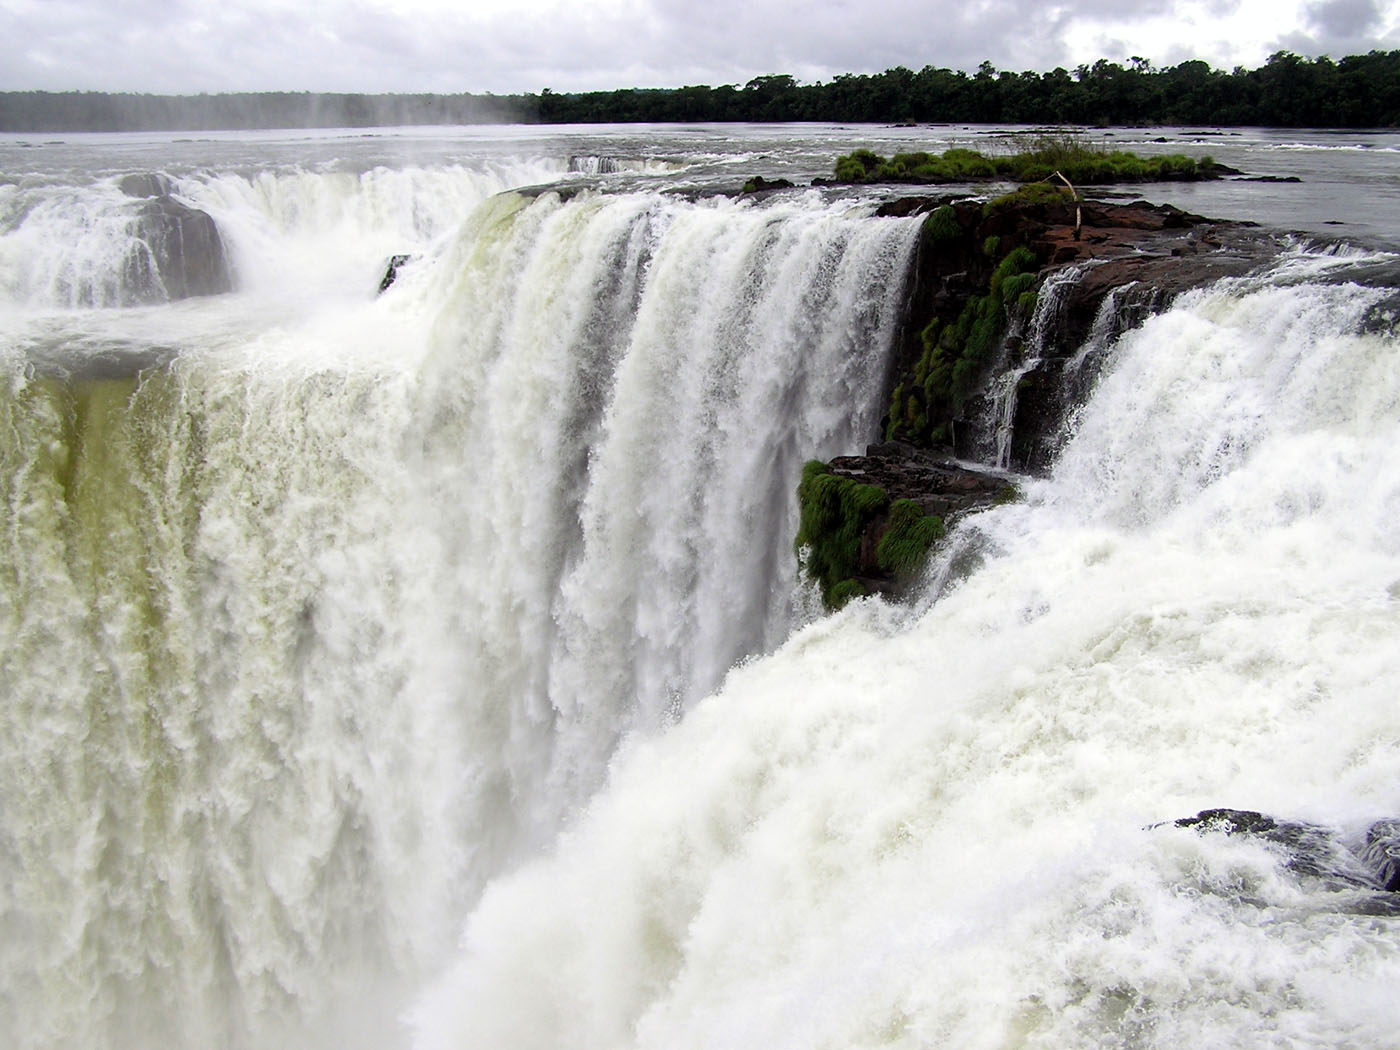 Garganta del Diablo, Iguazu Falls, Argentina/Brazil